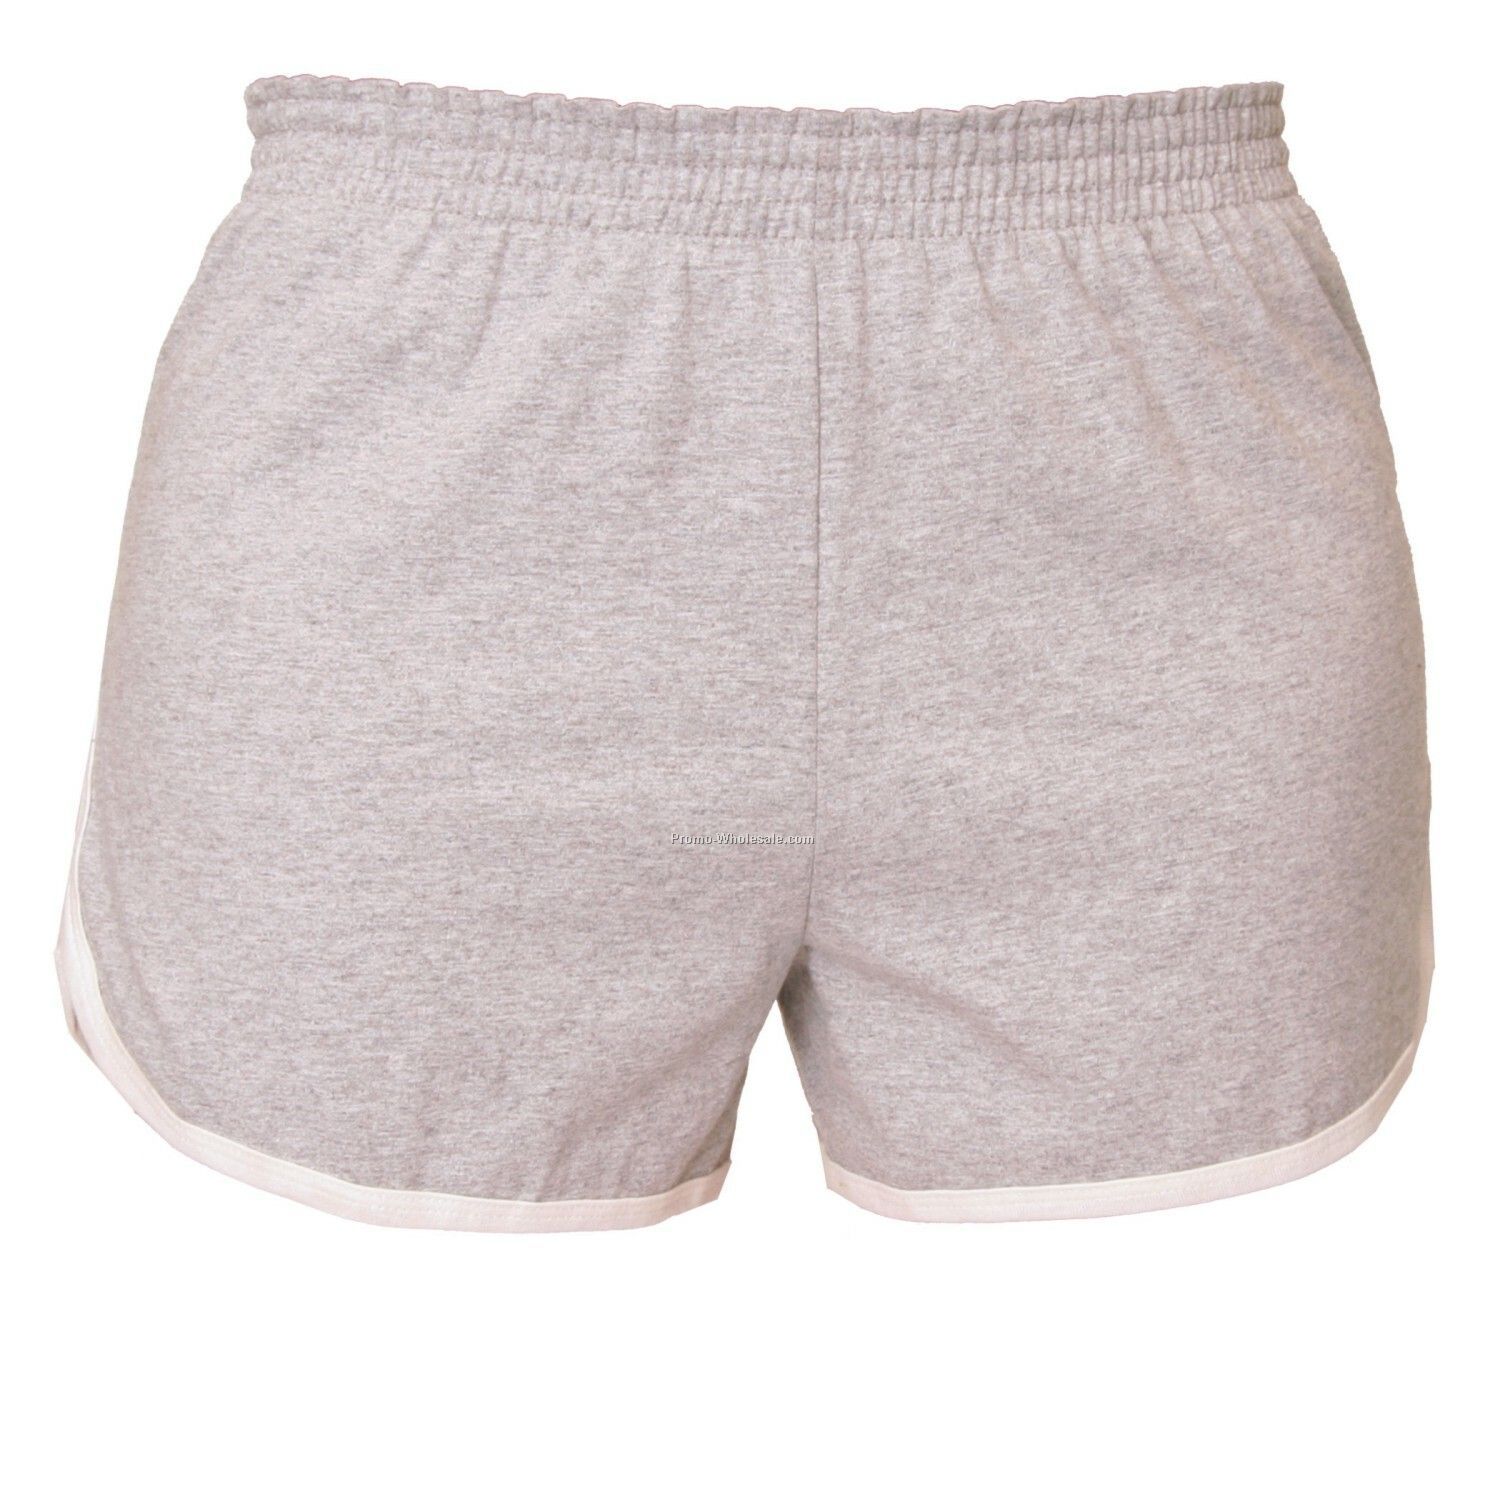 Adults' Heather Grey Retro Shorts (Xs-xl)